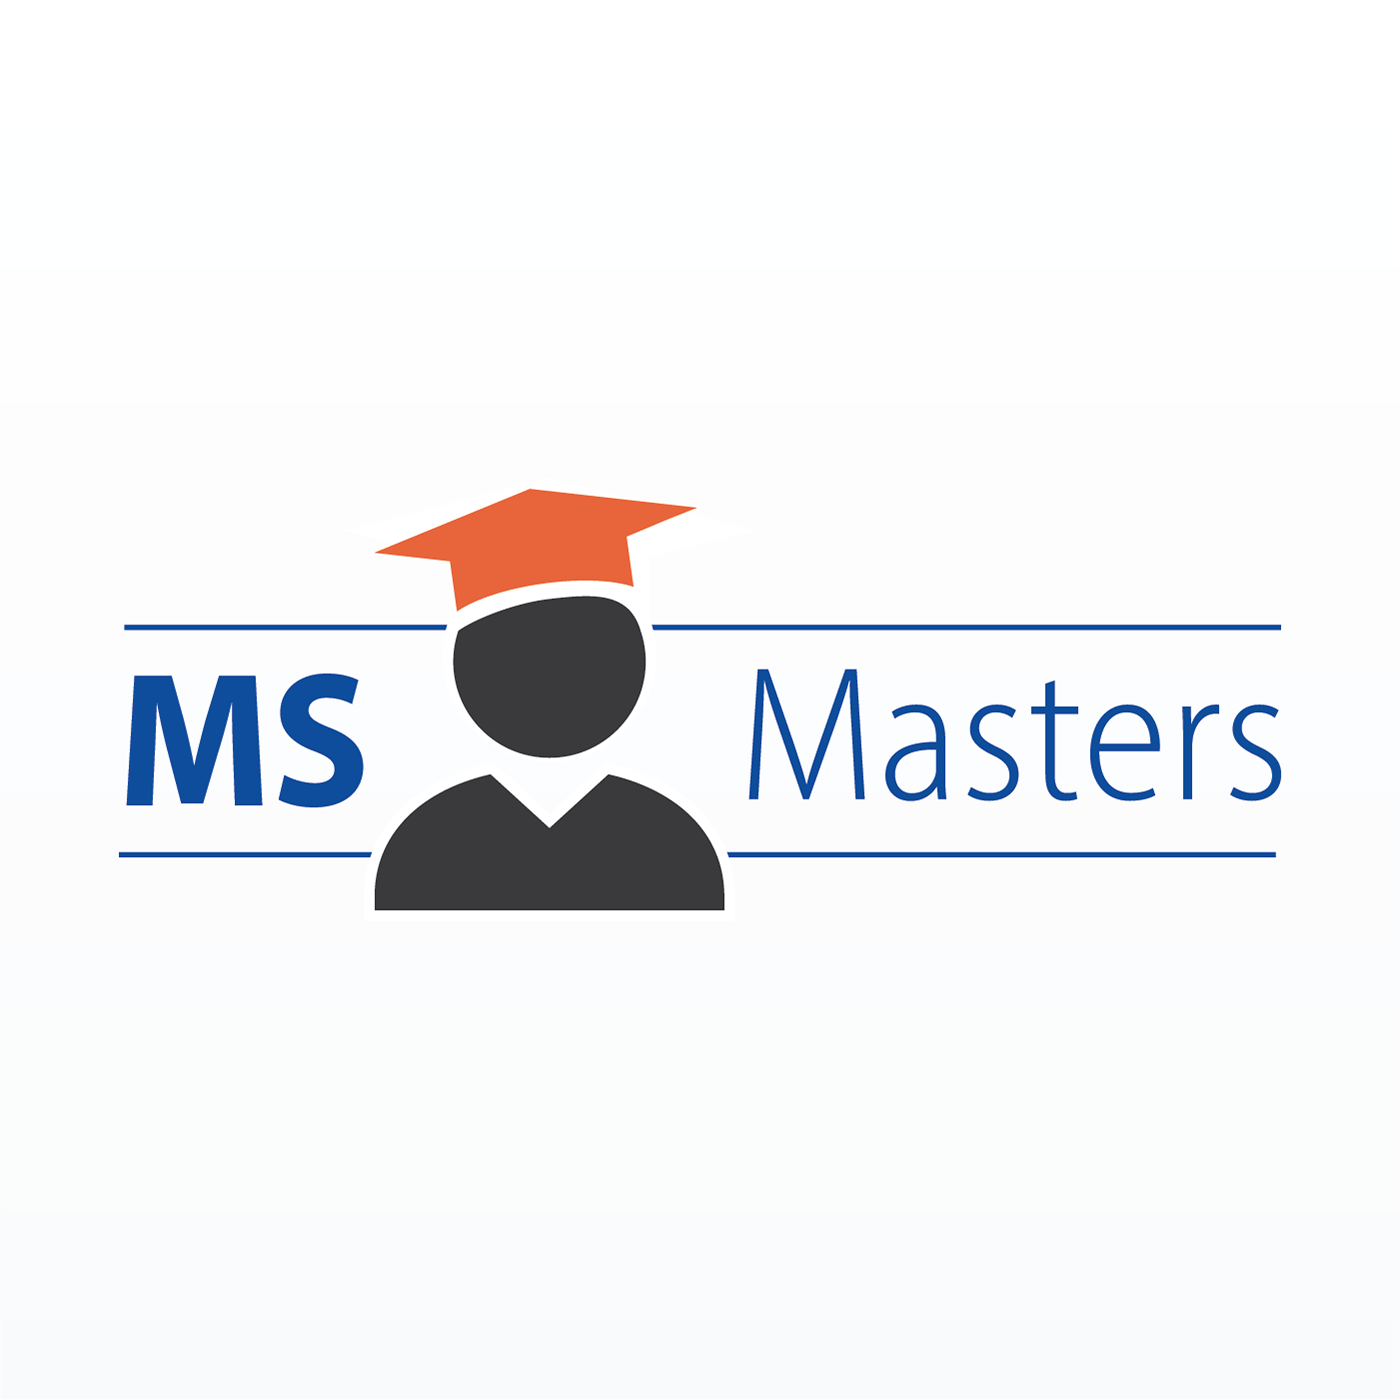 MS Masters Toolbox: Fatigue